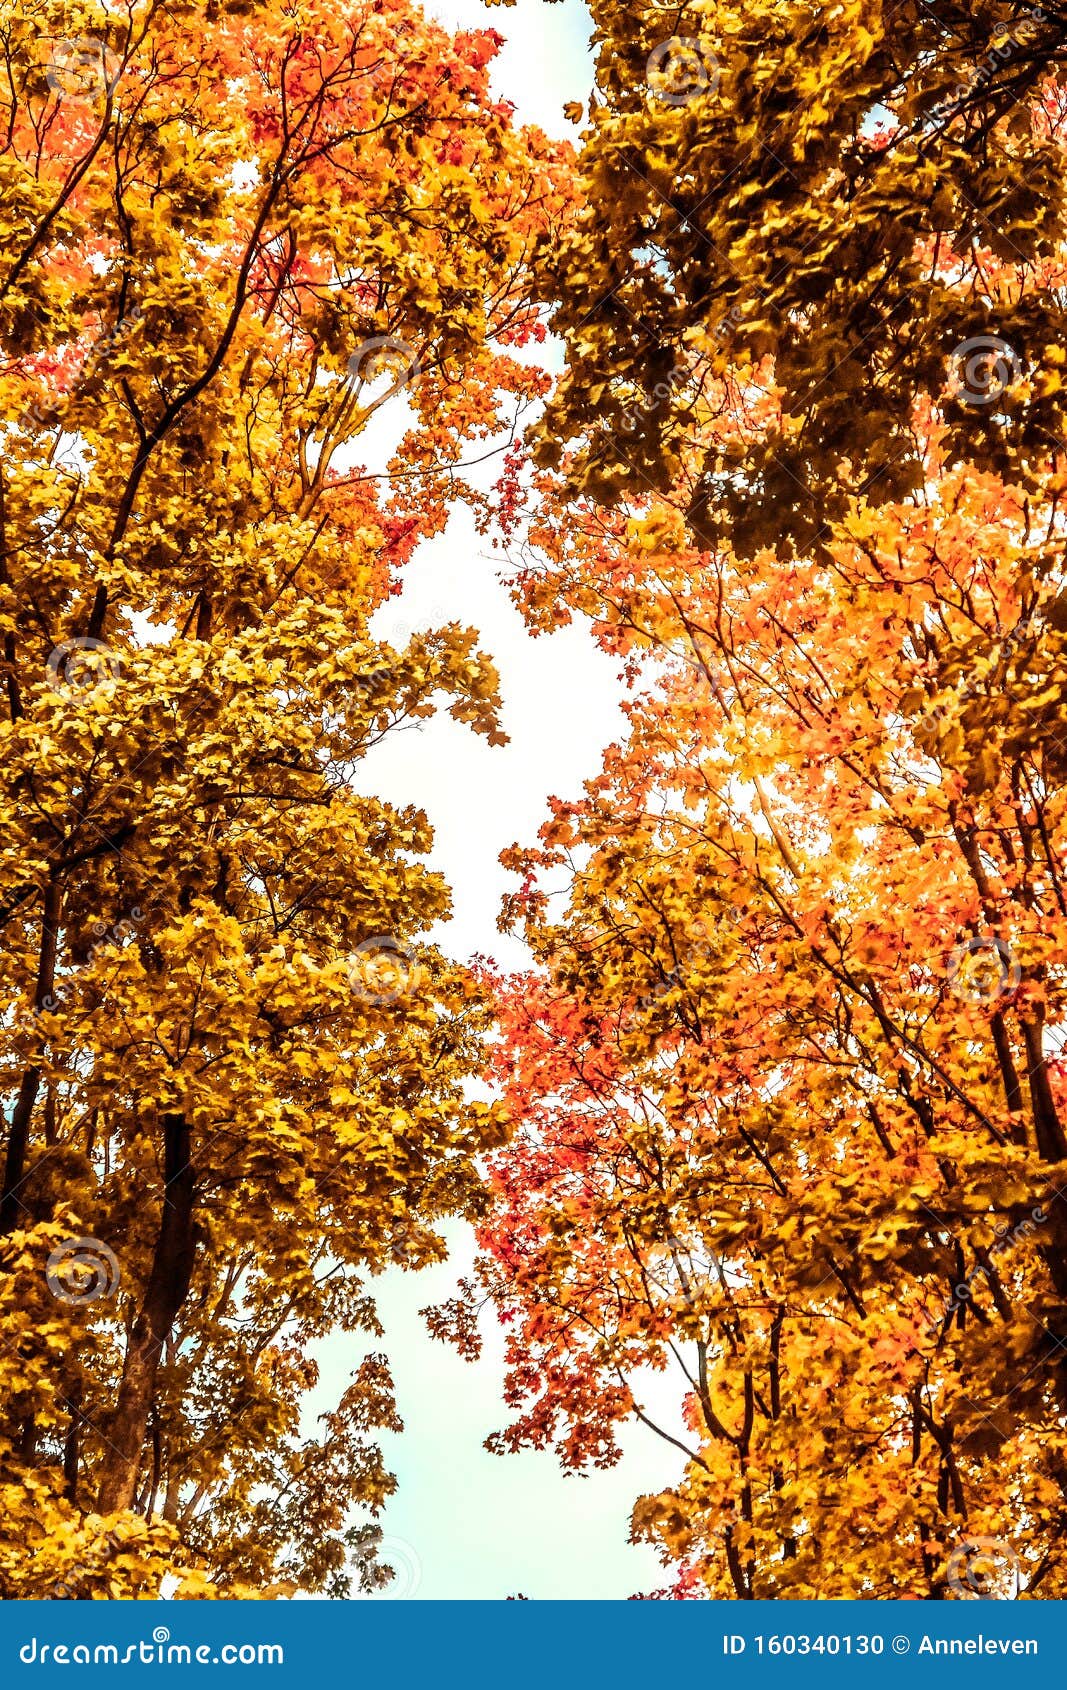 emulsion undertøj Broderskab Beautiful Autumn Landscape Background, Vintage Nature Scene in Fall Season  Stock Photo - Image of november, holiday: 160340130